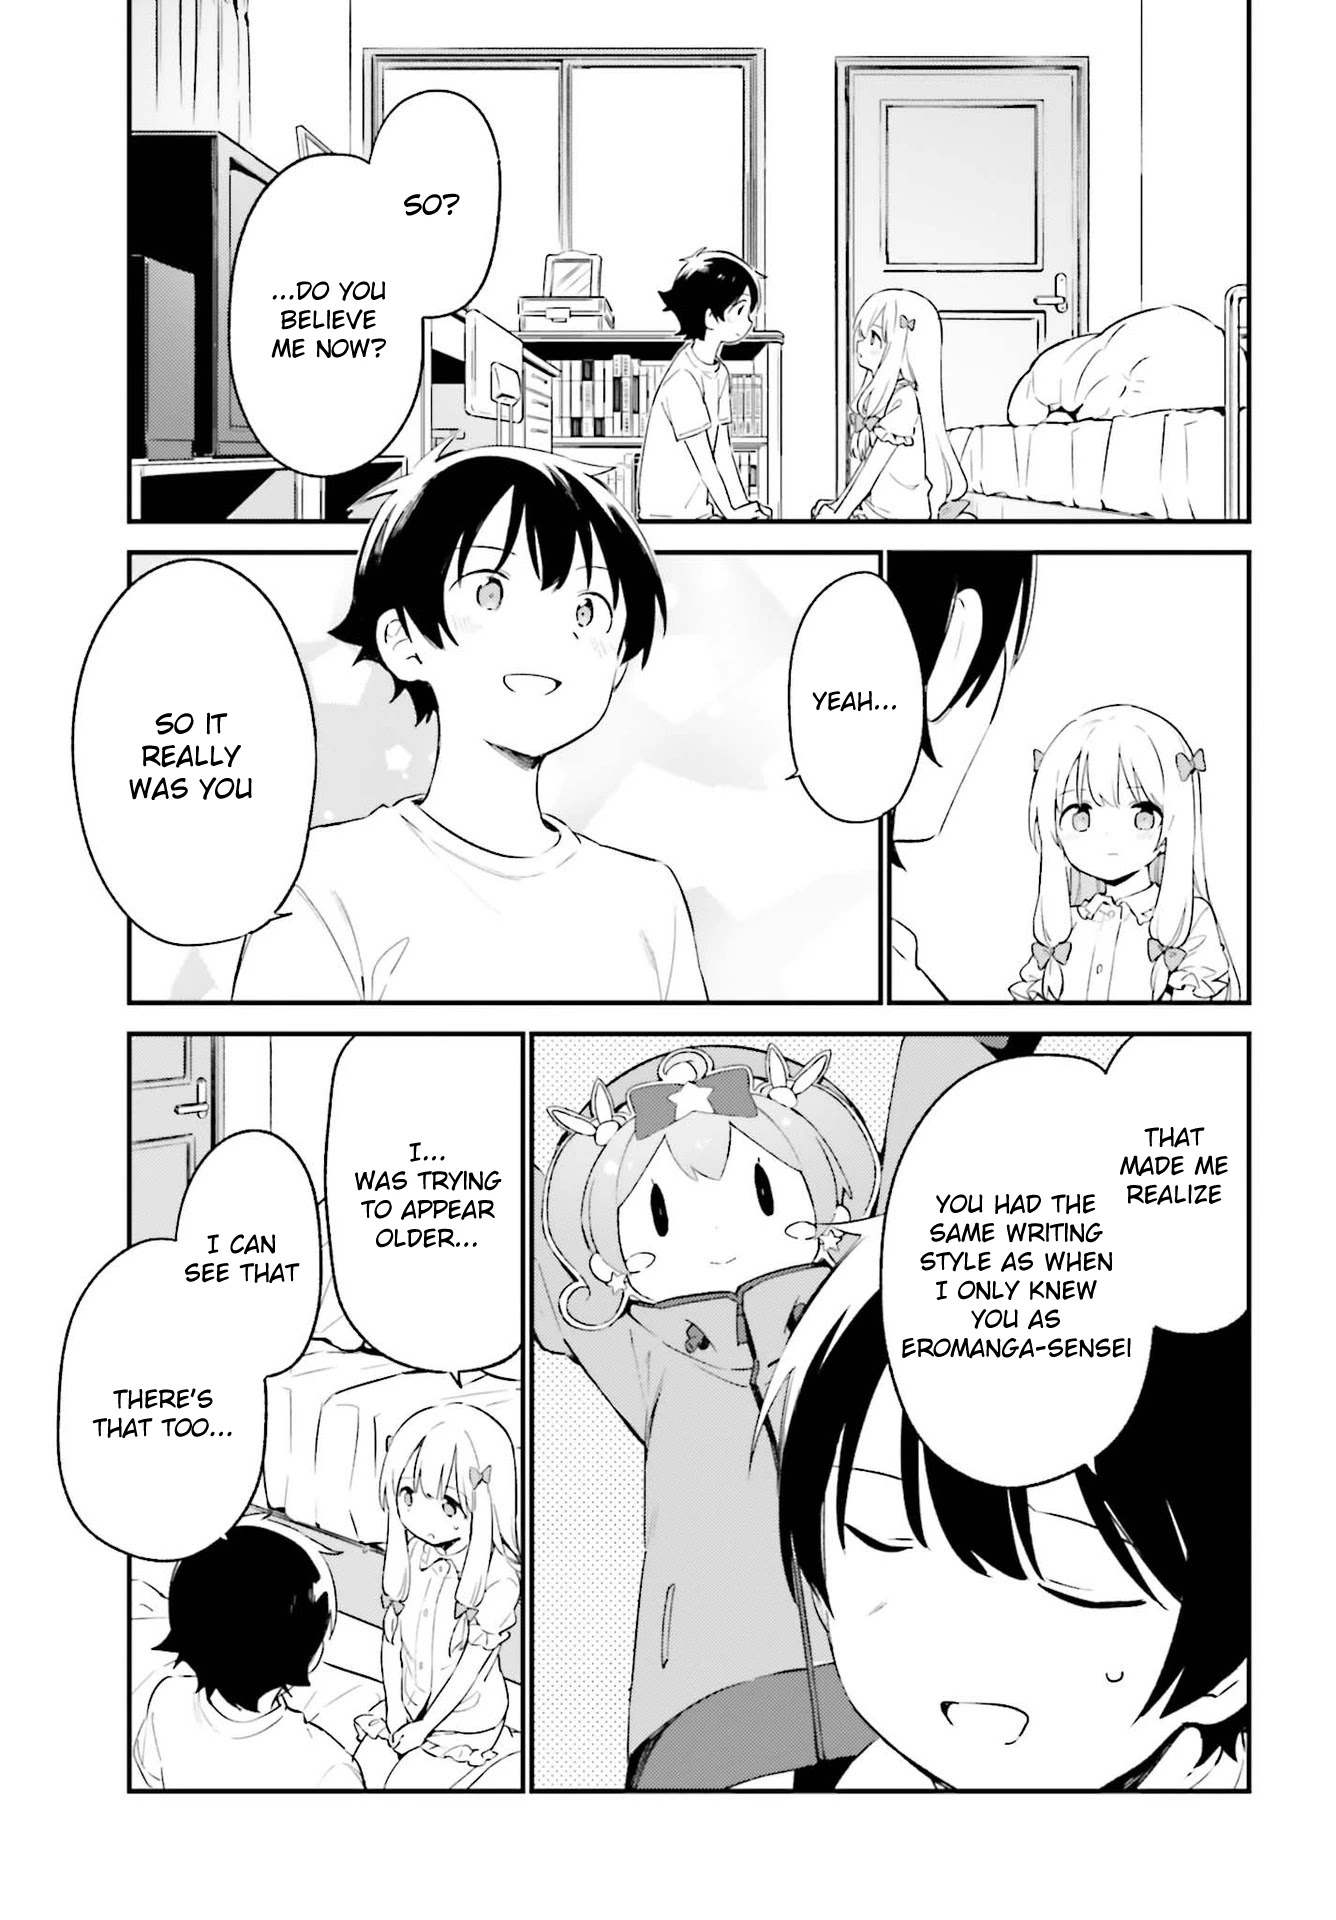 Ero Manga Sensei - 77 page 27-b1e8de41